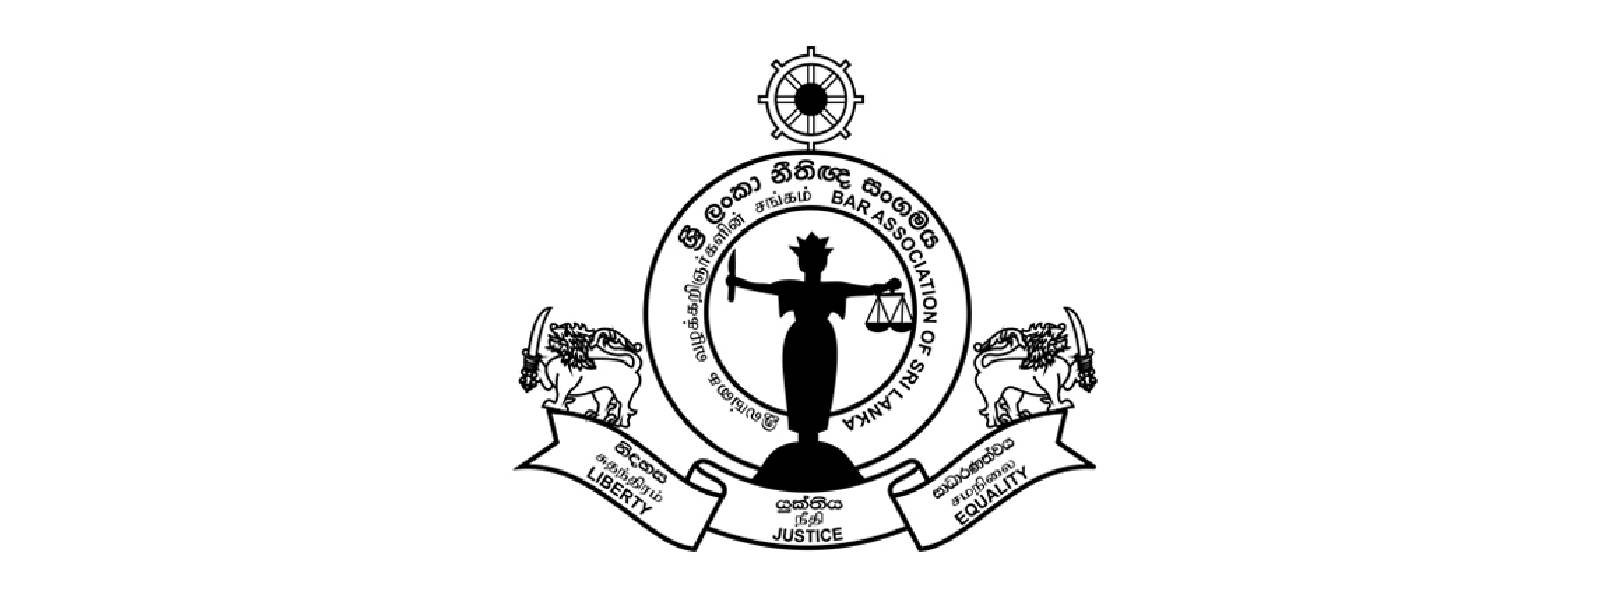 Kandy Tragedy : BASL calls on Sri Lanka Police to conduct proper investigation